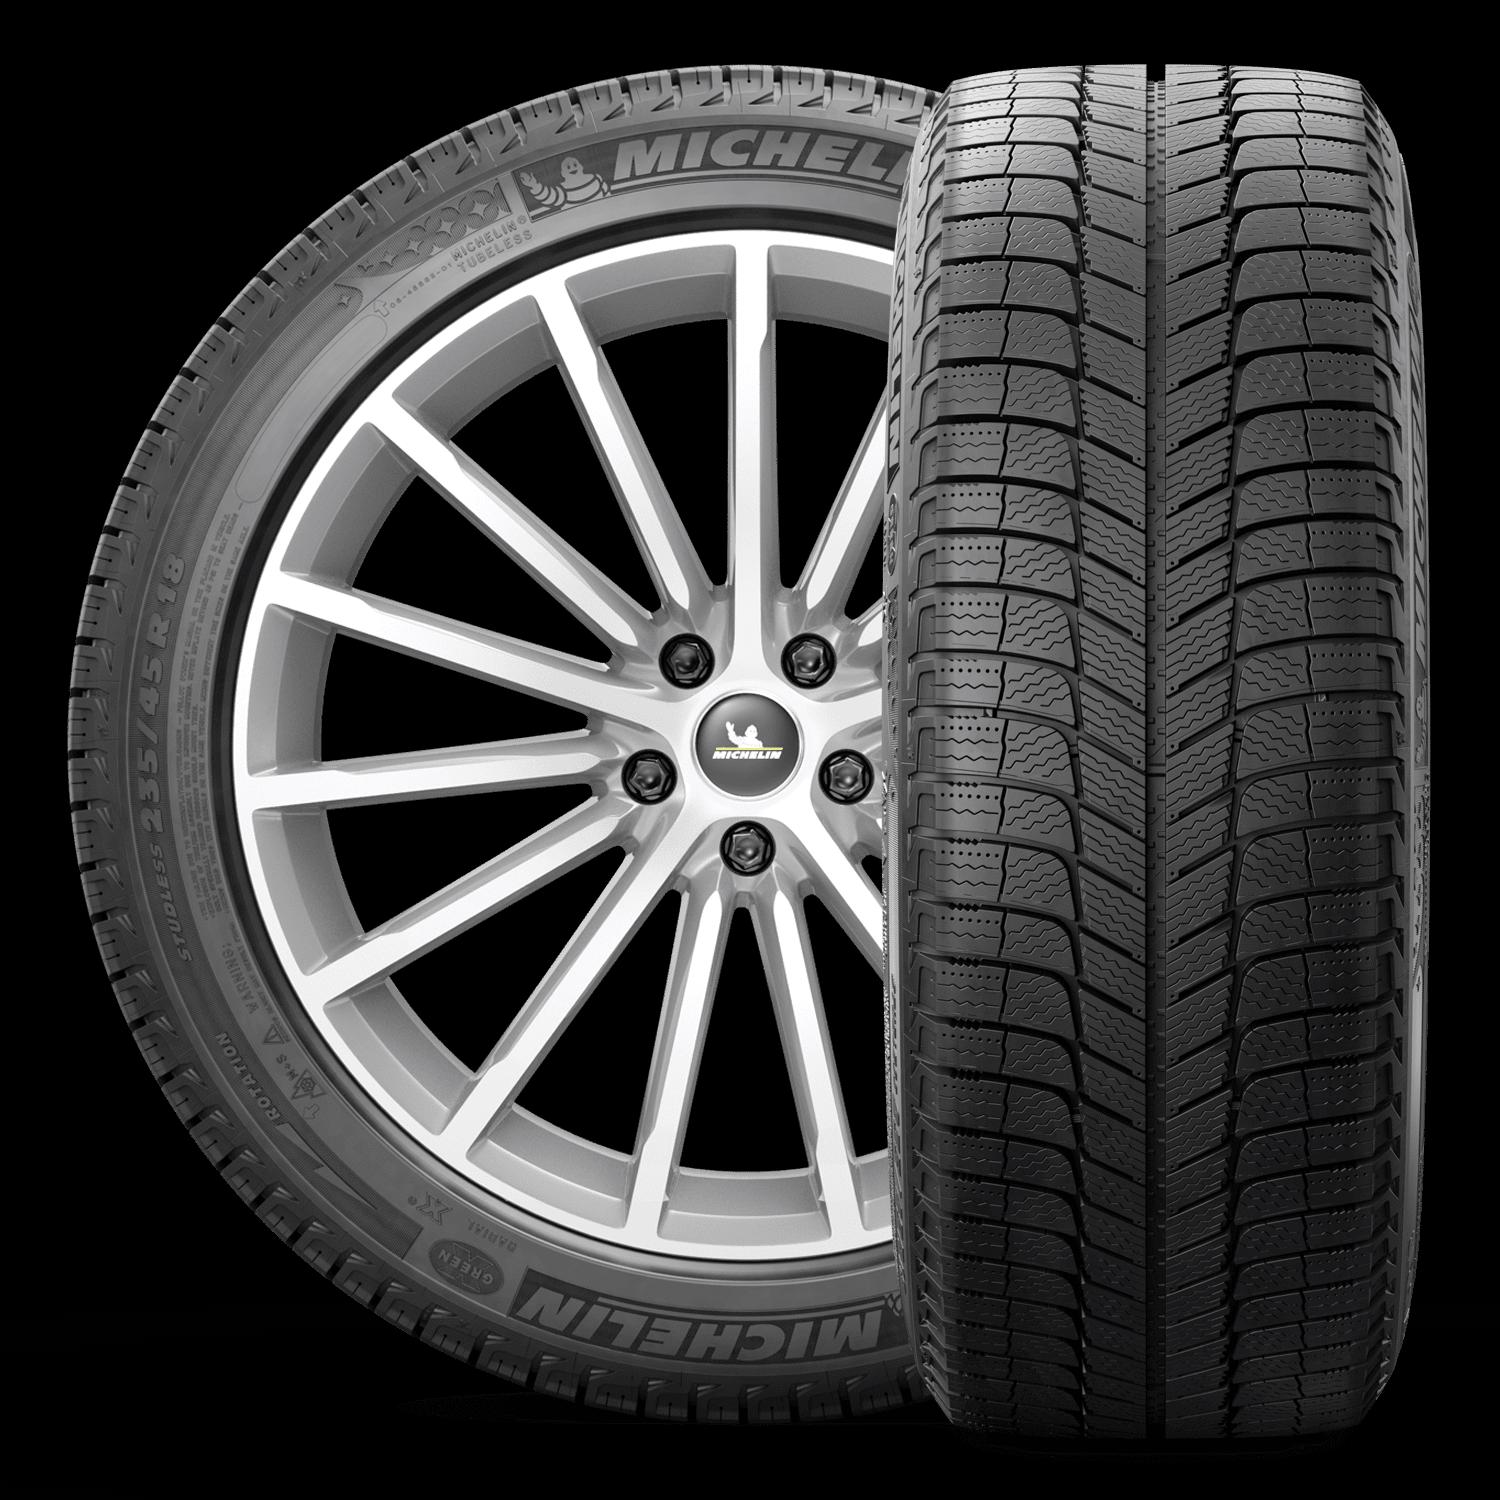 Michelin X-Ice Xi3 Winter 205/65R16 99T XL Passenger Tire